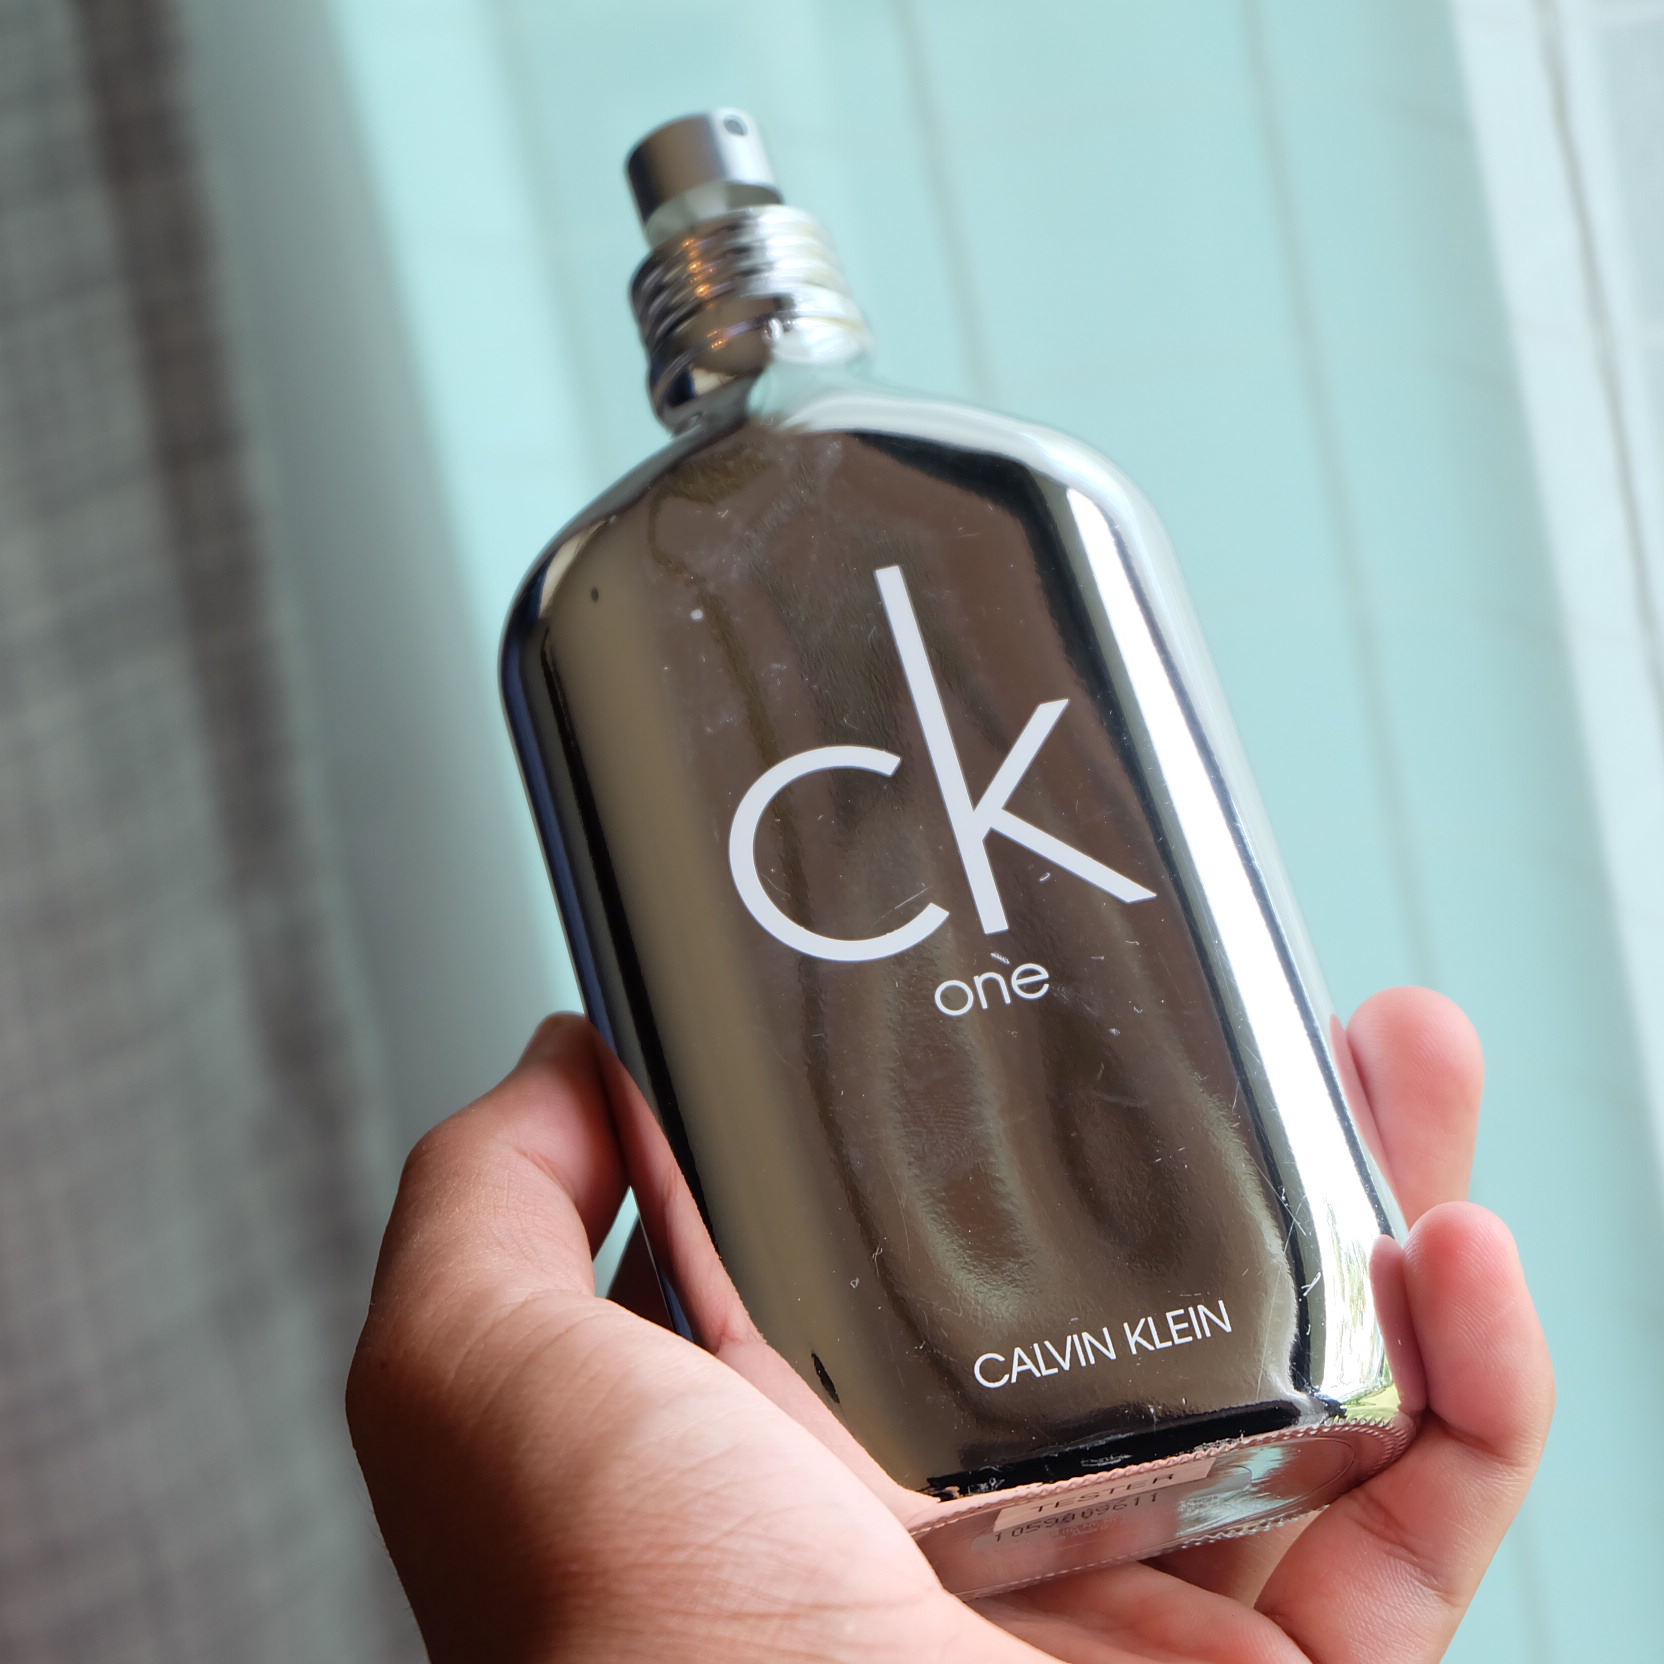 CK Calvin Klein One Platinum Edition EDT มาพร้อมแพ็คเกจสีเงินสุดหรู